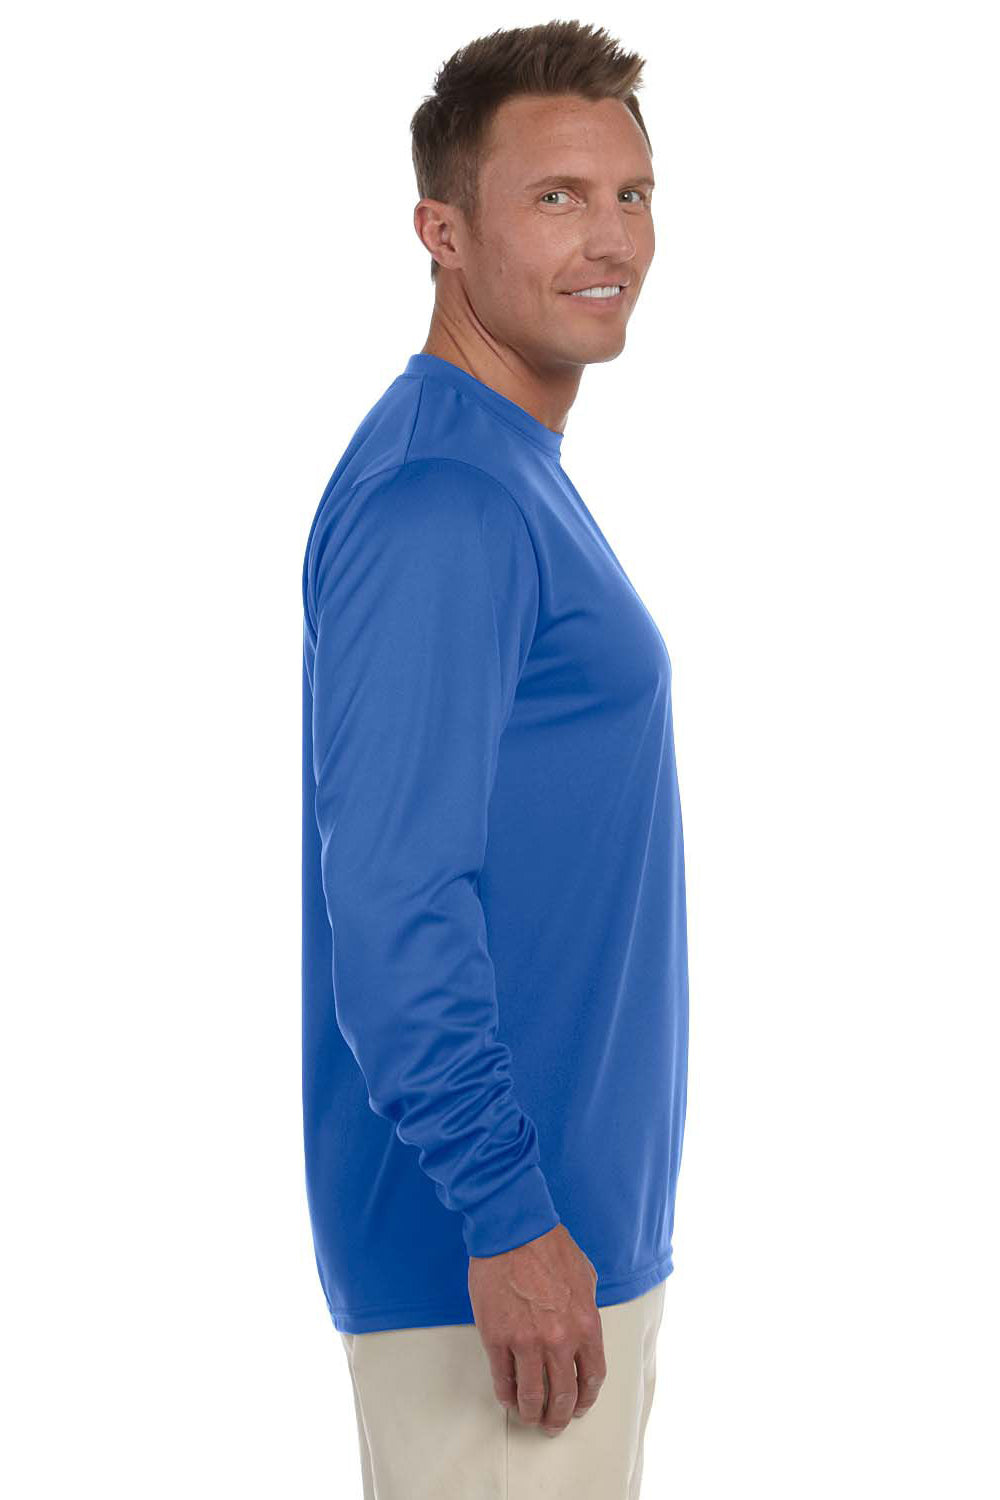 Augusta Sportswear 788 Mens Moisture Wicking Long Sleeve Crewneck T-Shirt Royal Blue Model Side